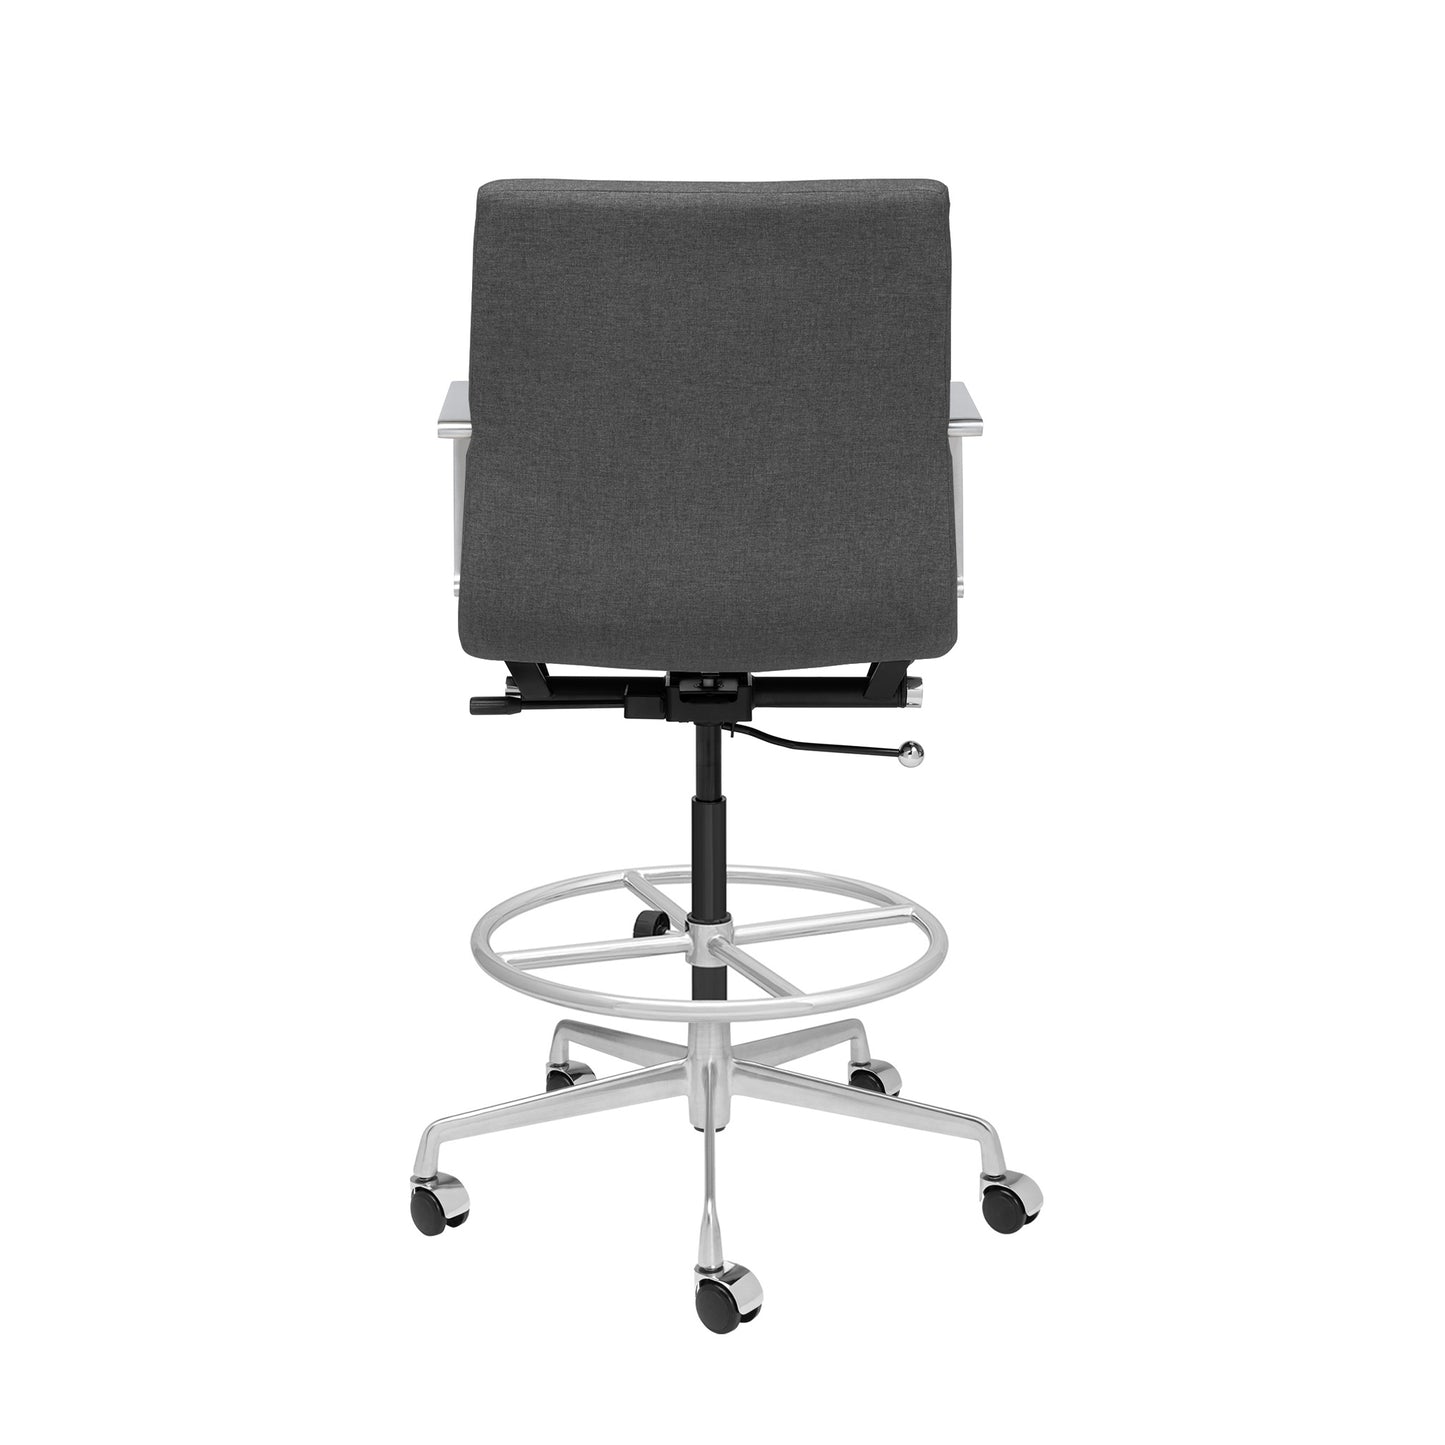 SHIPS MAY 17TH - SOHO II Ribbed Drafting Chair (Charcoal Fabric)